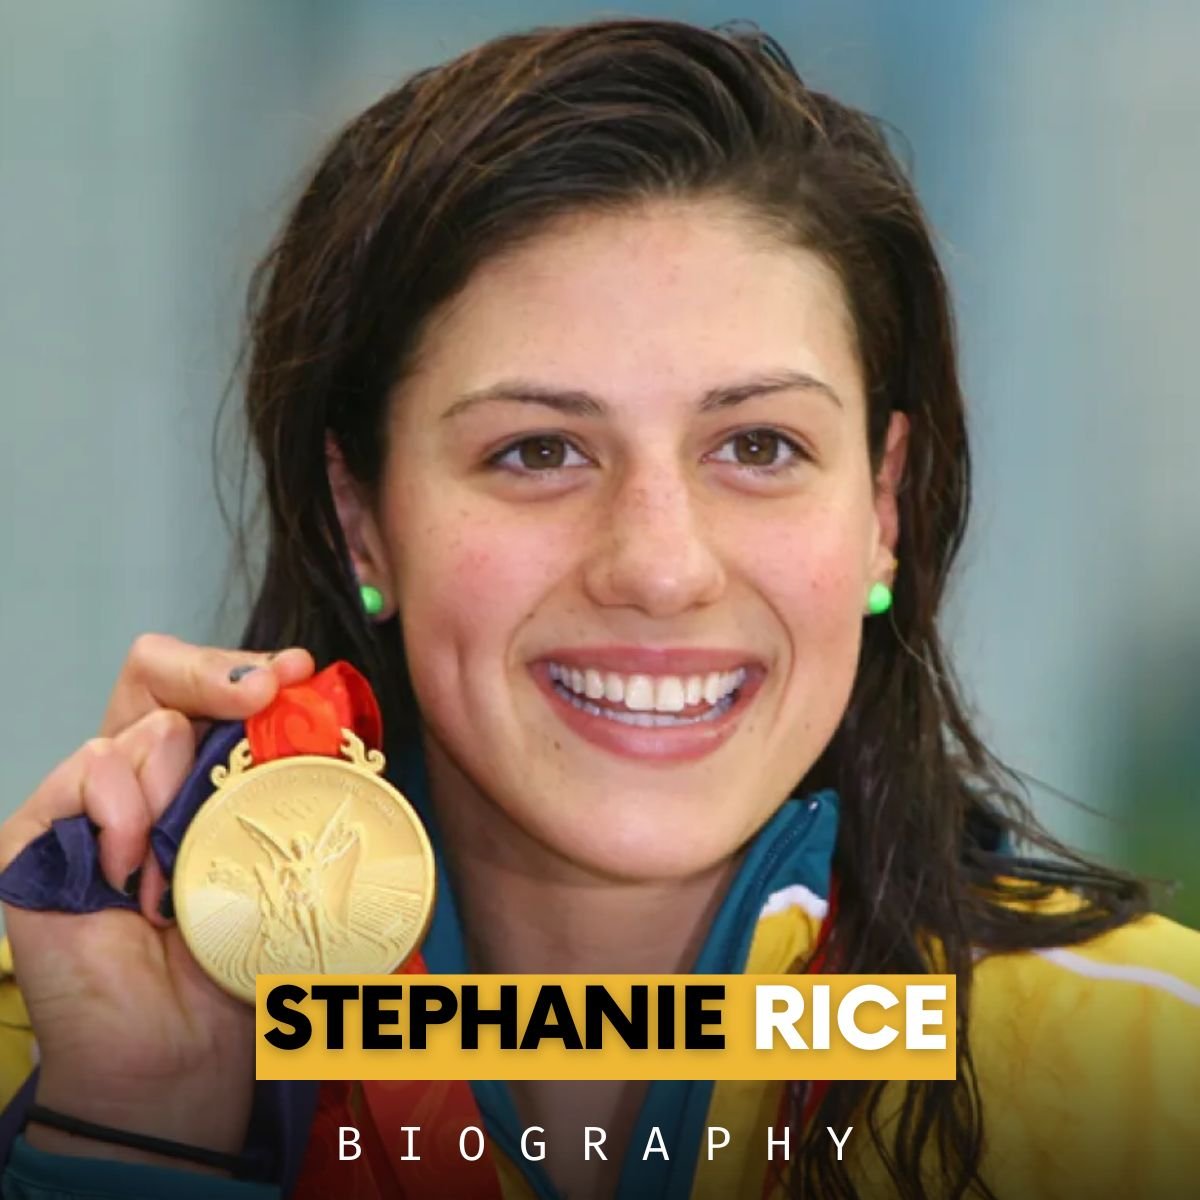 Stephanie Rice biography